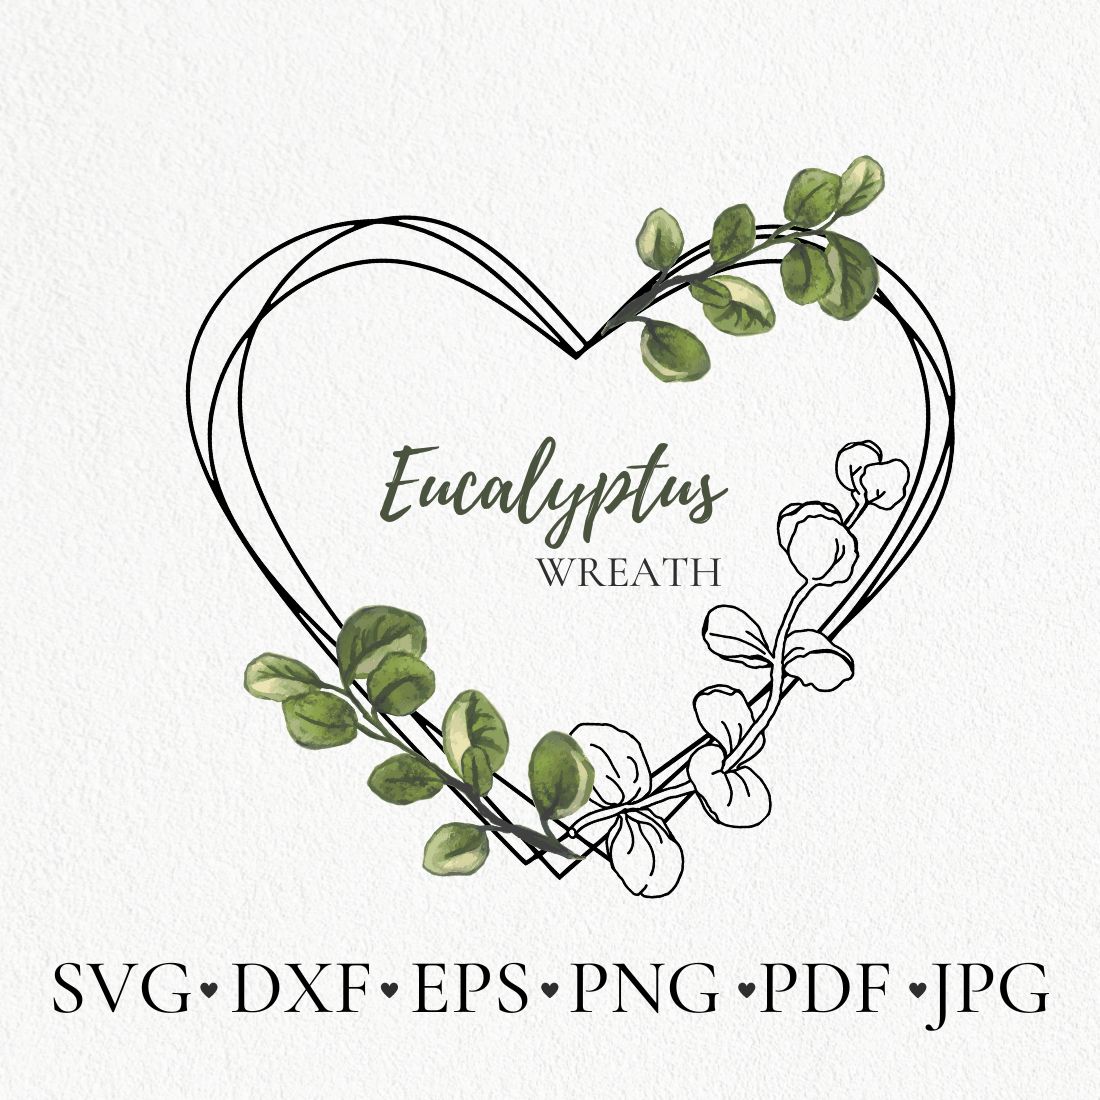 Eucalyptus watercolor heart frame for wedding cover image.